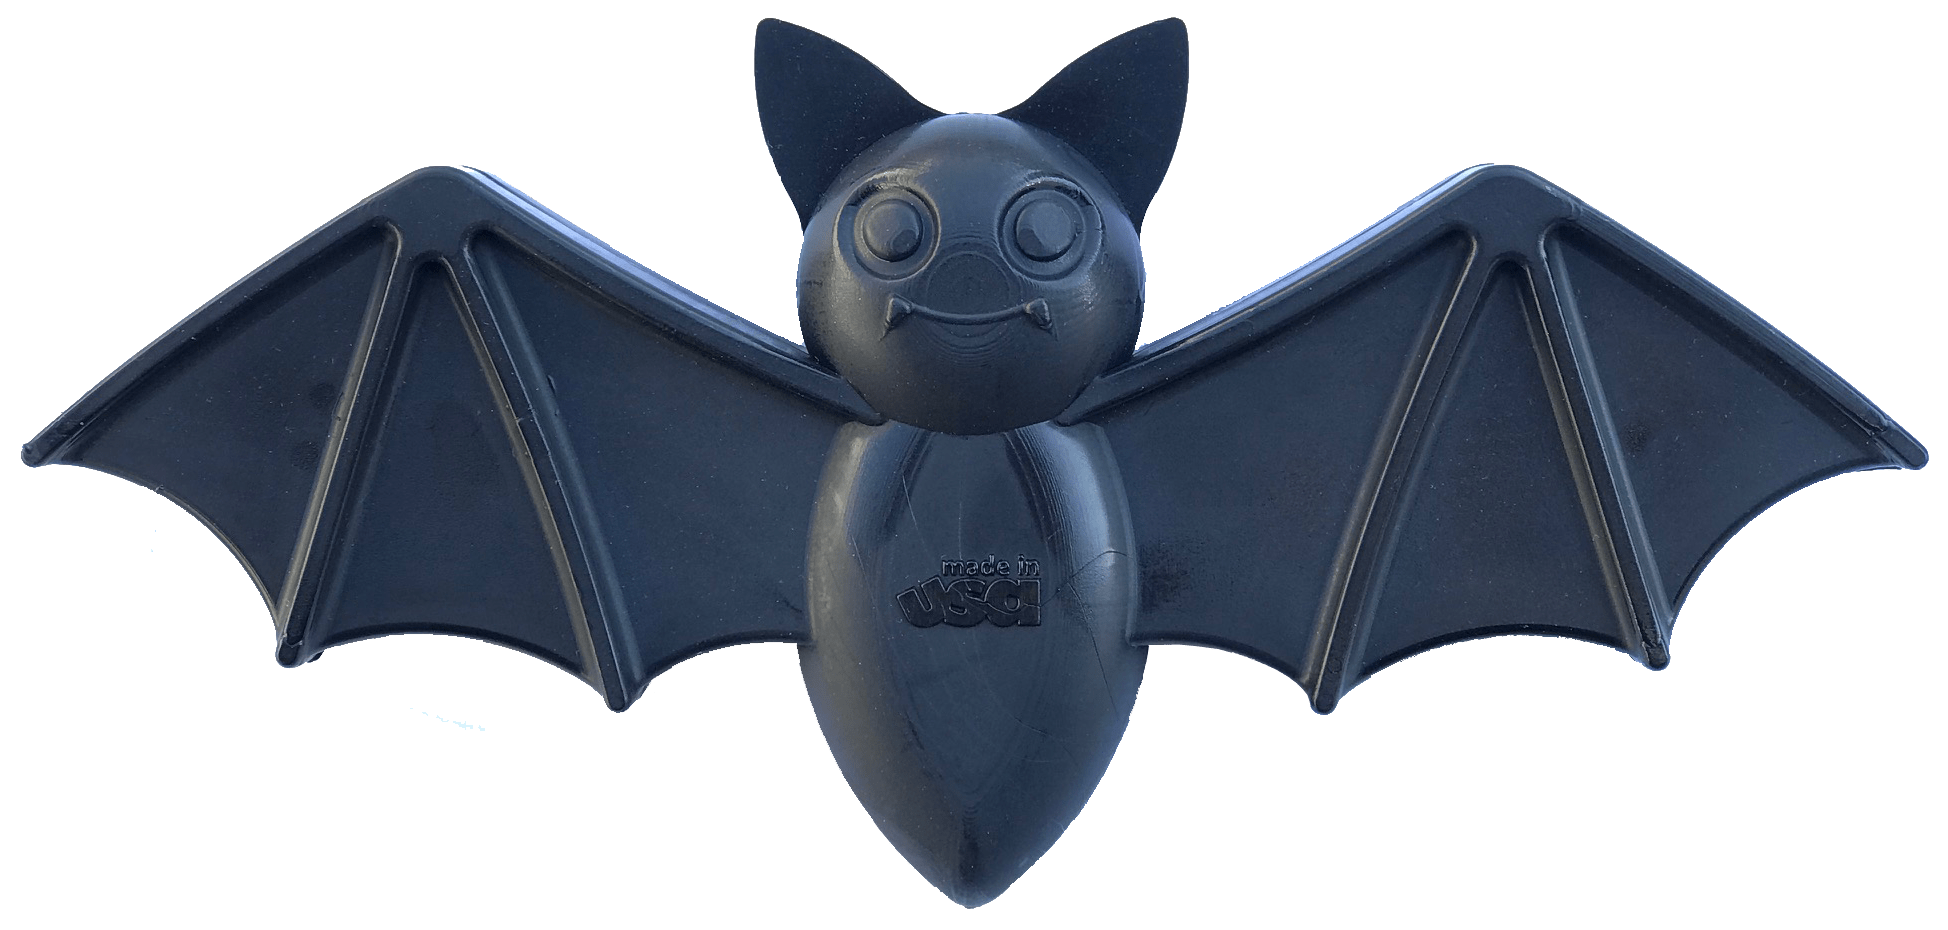 SodaPup Vampire Bat Ultra Durable Nylon Dog Chew Toy for Aggressive Chewers- Black - Vampire Nylon Toy Large - Black